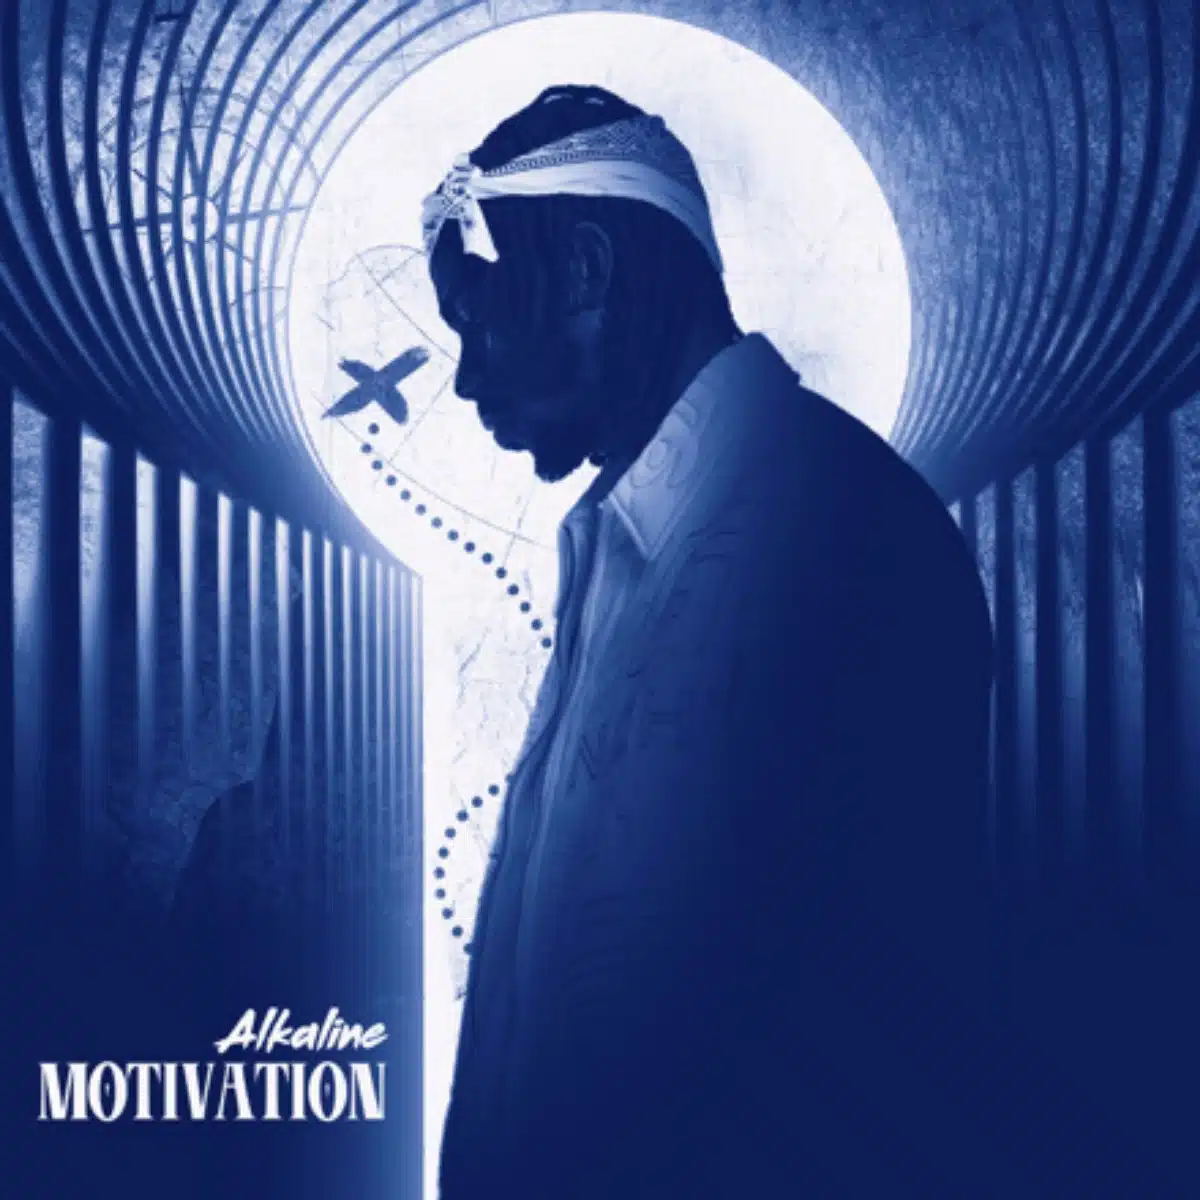 DOWNLOAD: Alkaline – “Motivation” Mp3